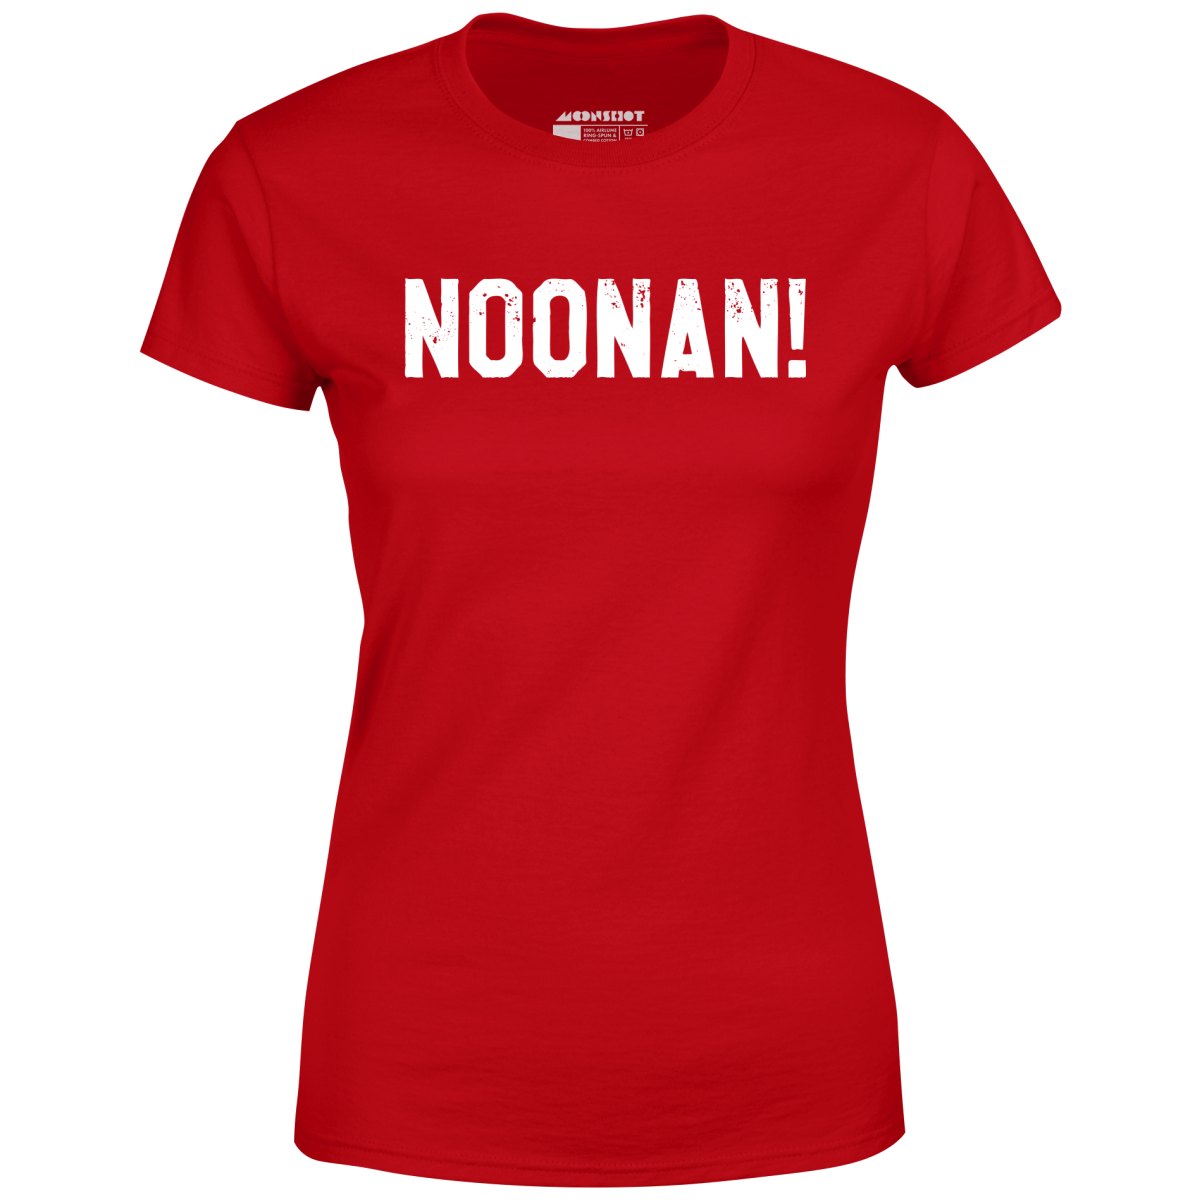 Noonan! - Women's T-Shirt